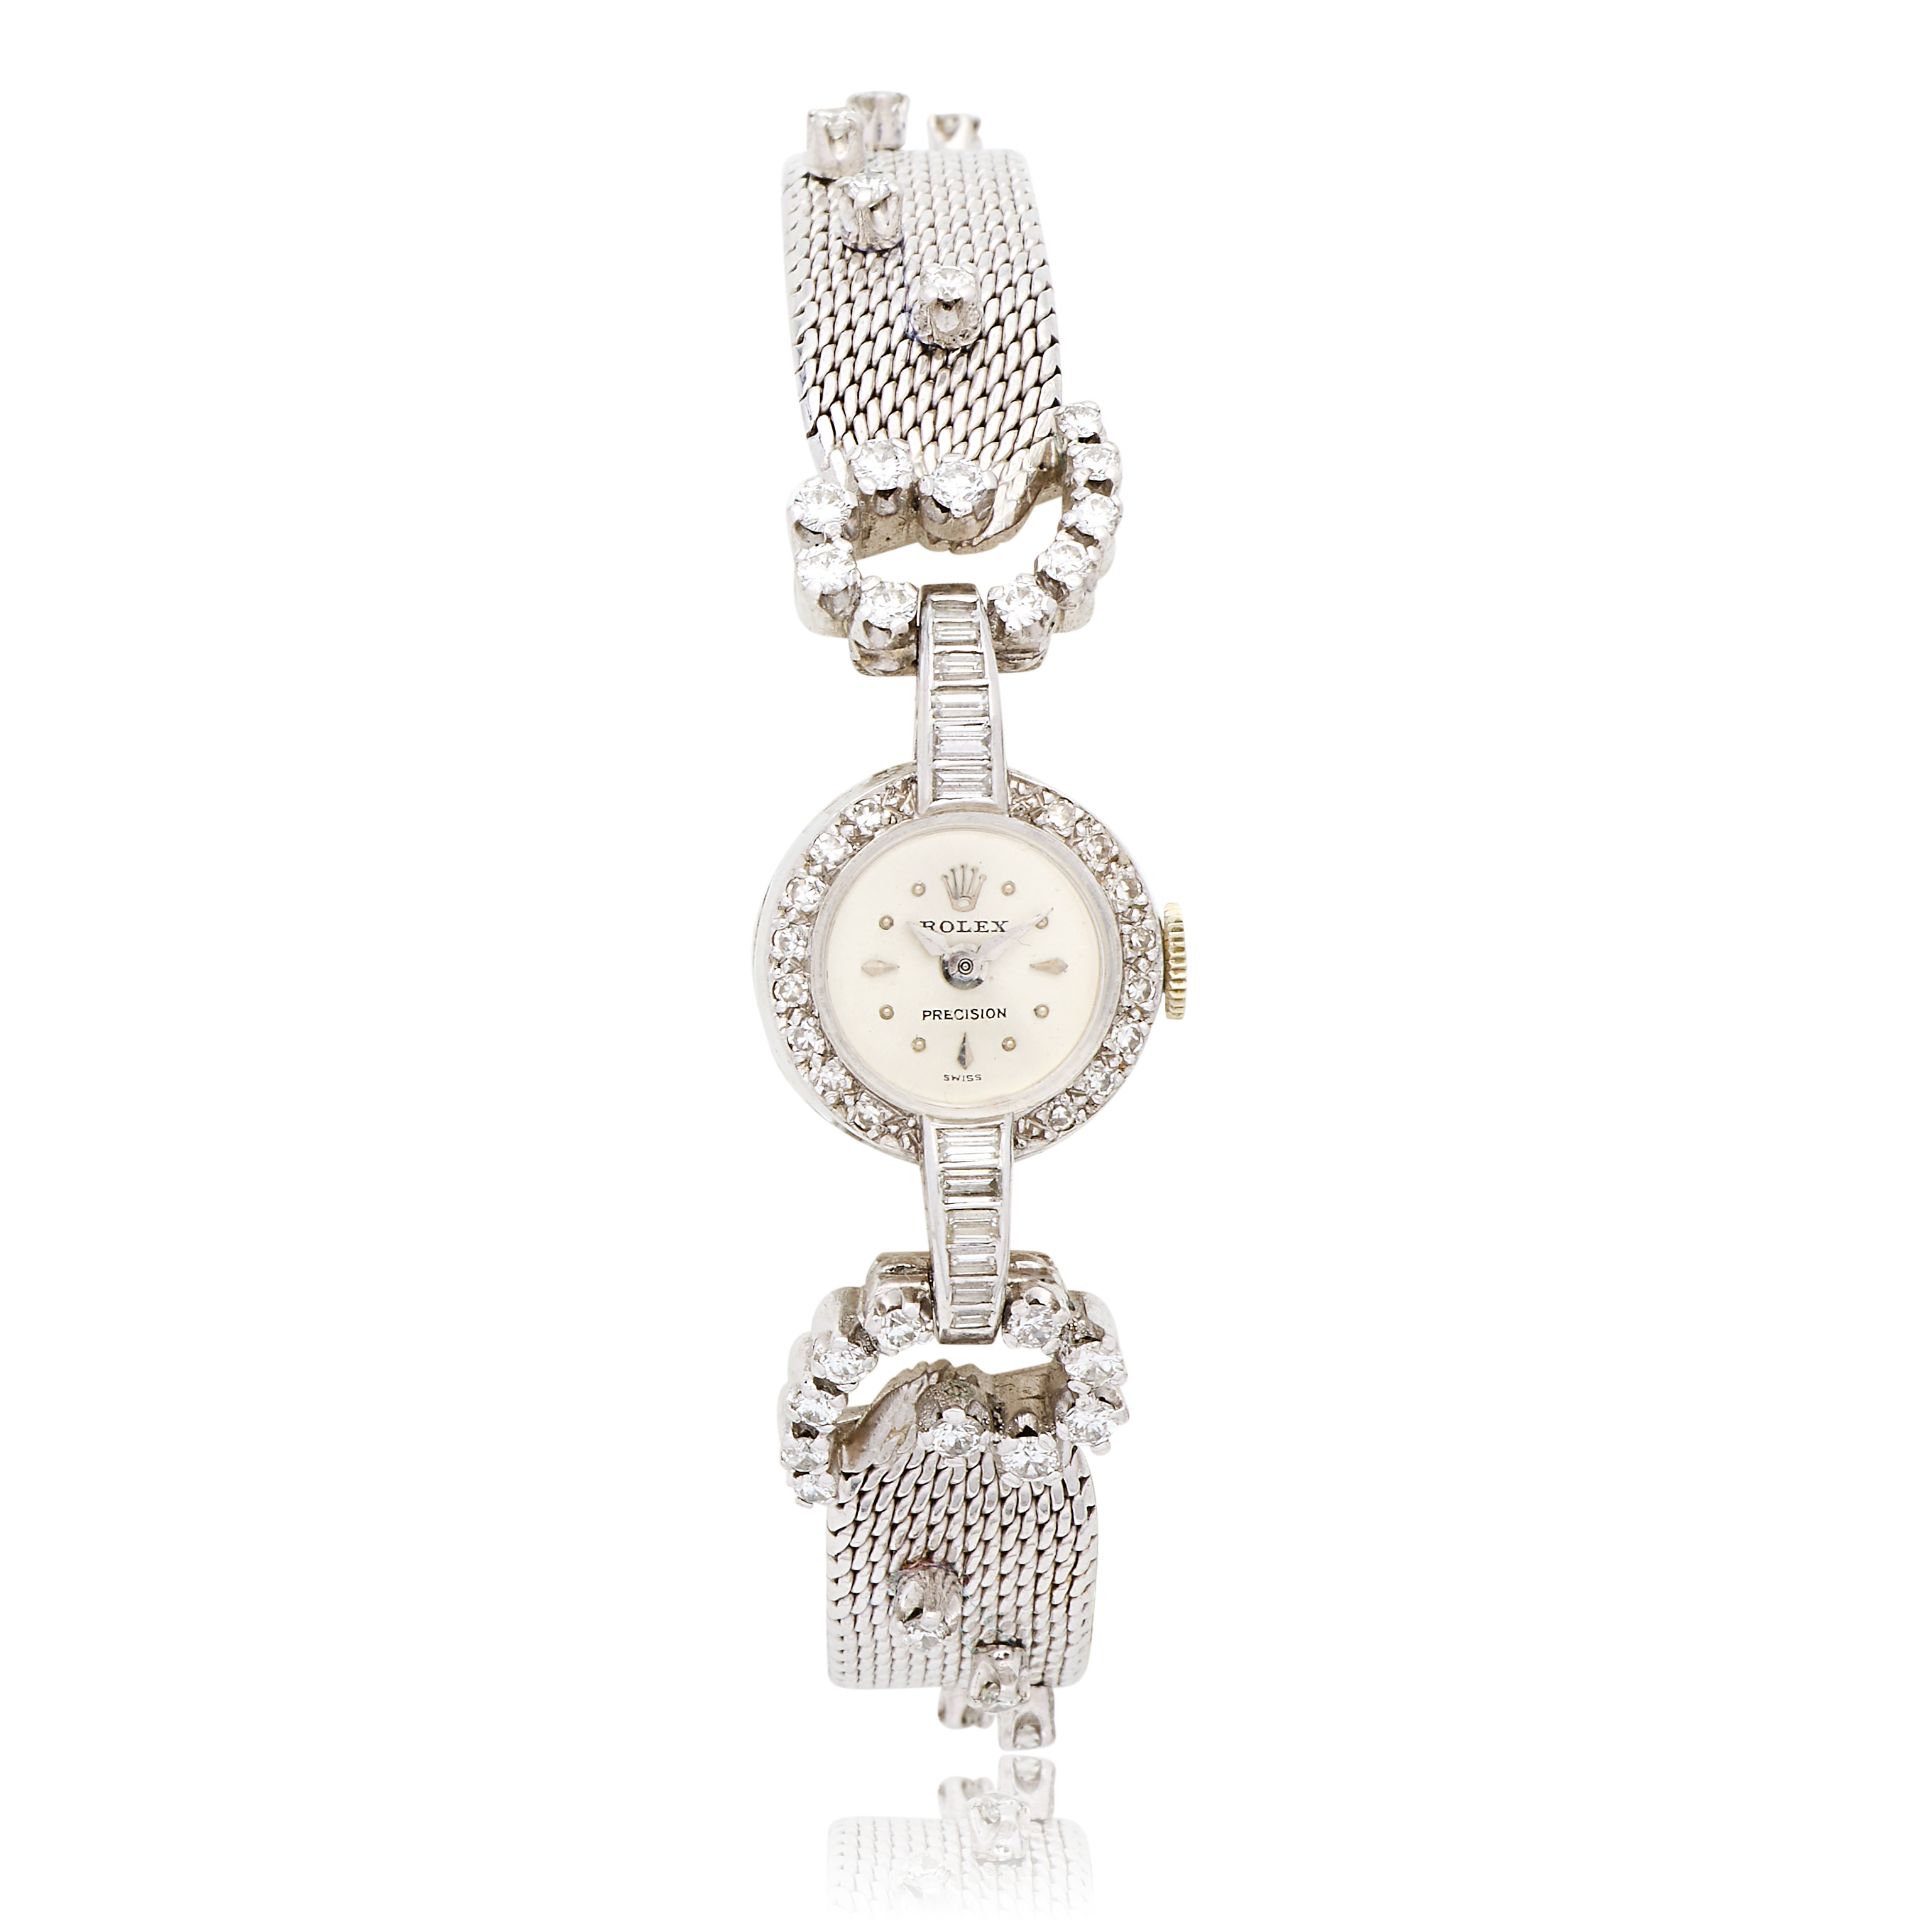 Rolex. A lady's 18K white gold manual wind bracelet watch Precision, London Hallmark for 1977